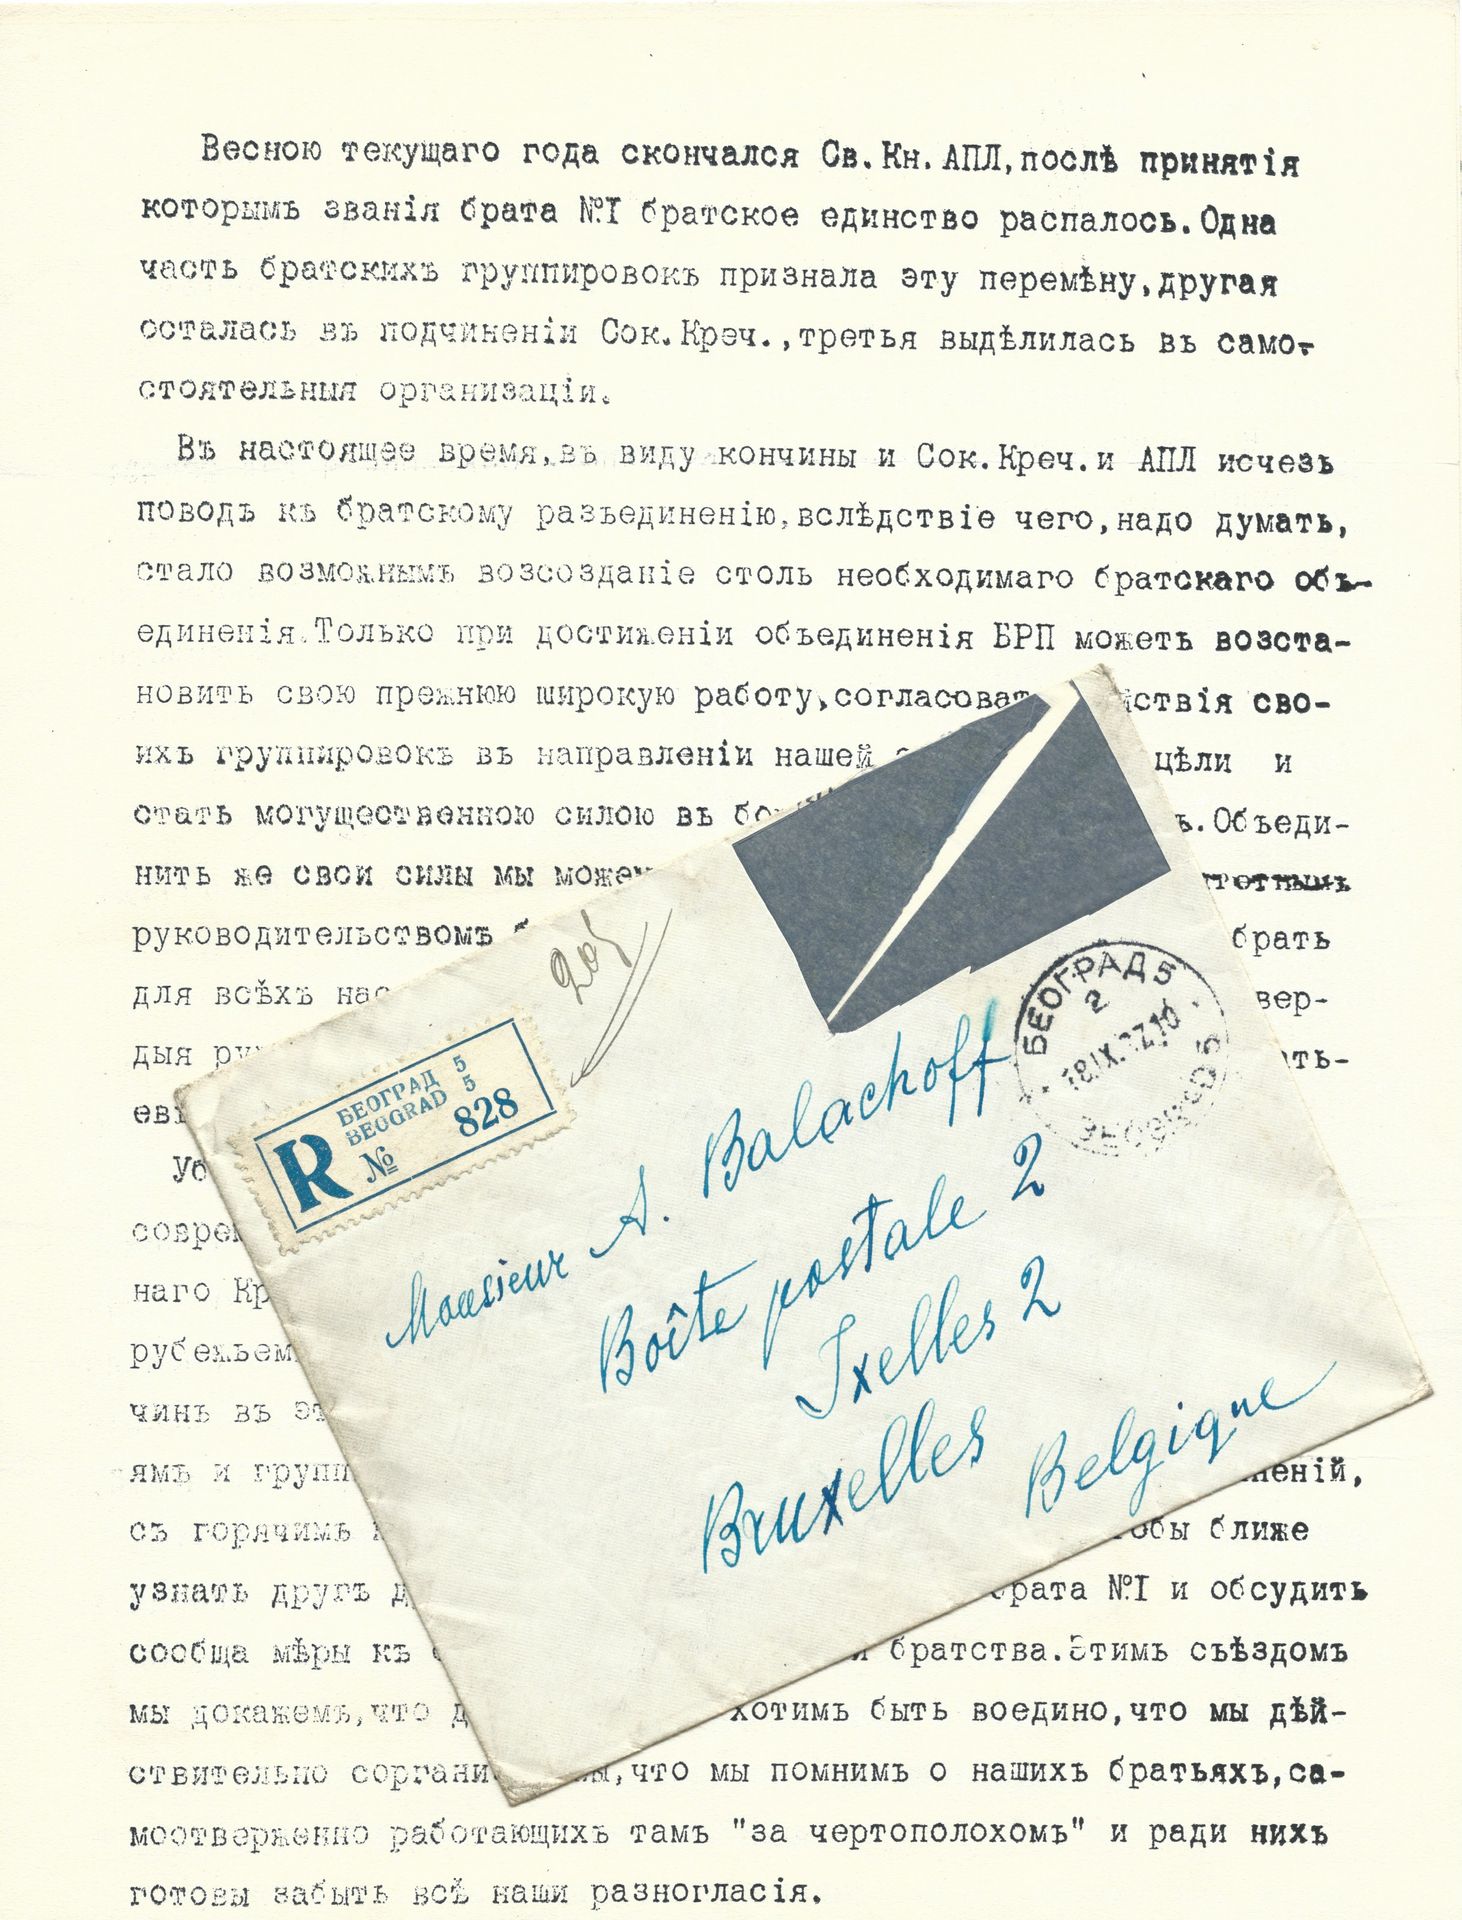 Null 1937年重新建立兄弟会

安德烈-巴拉肖夫（1899-1969）的档案

PERSIANOV Serge "Creator" - 亲笔签名

- 与&hellip;